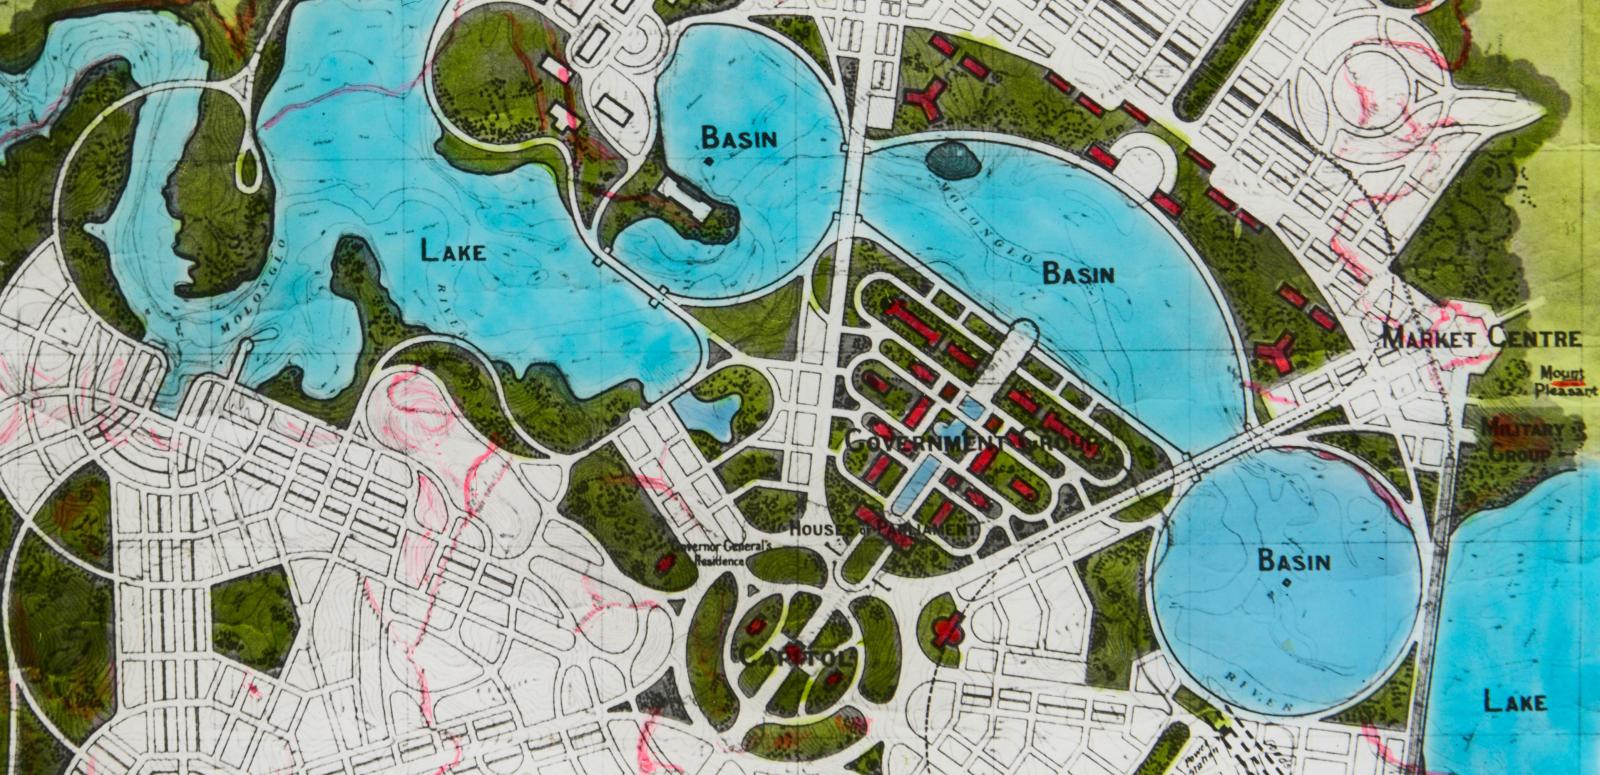 Glass slide of town planning design for Canberra